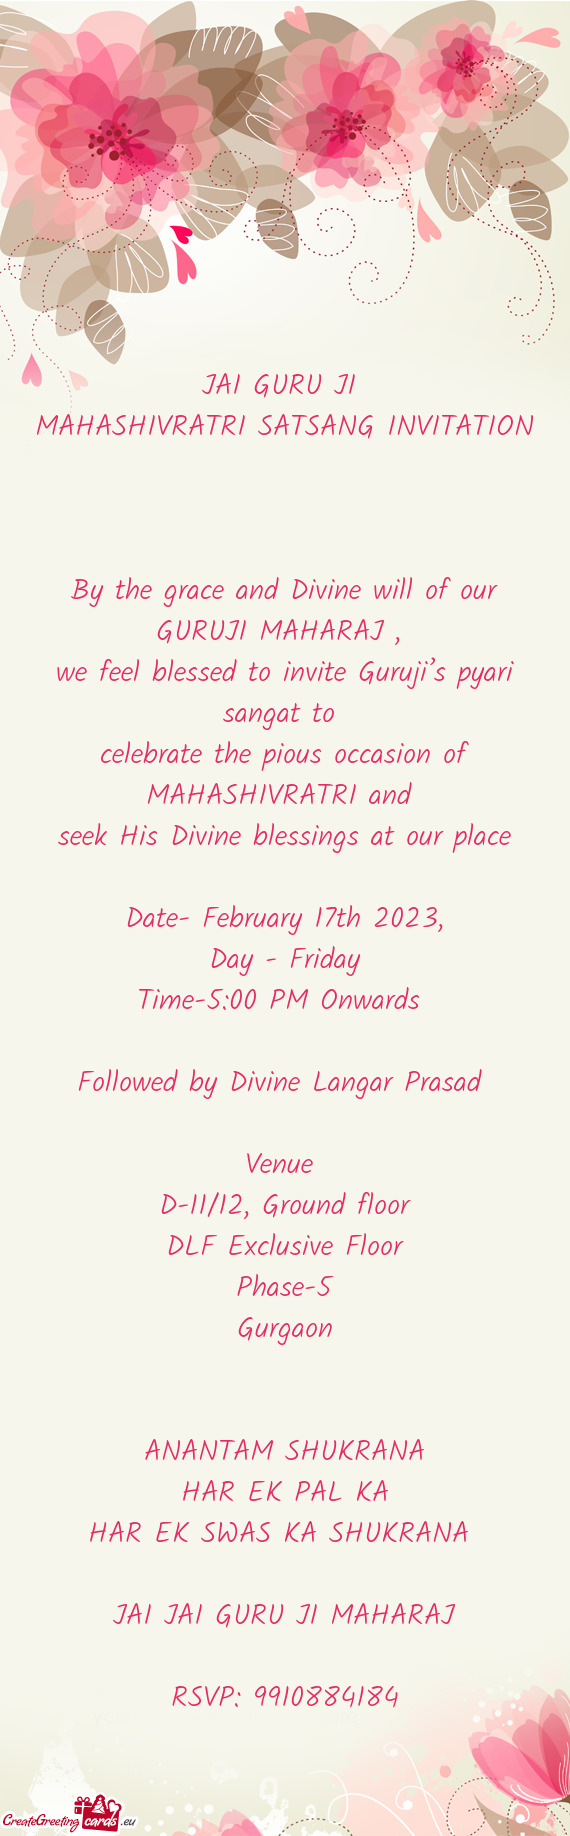 We feel blessed to invite Guruji’s pyari sangat to